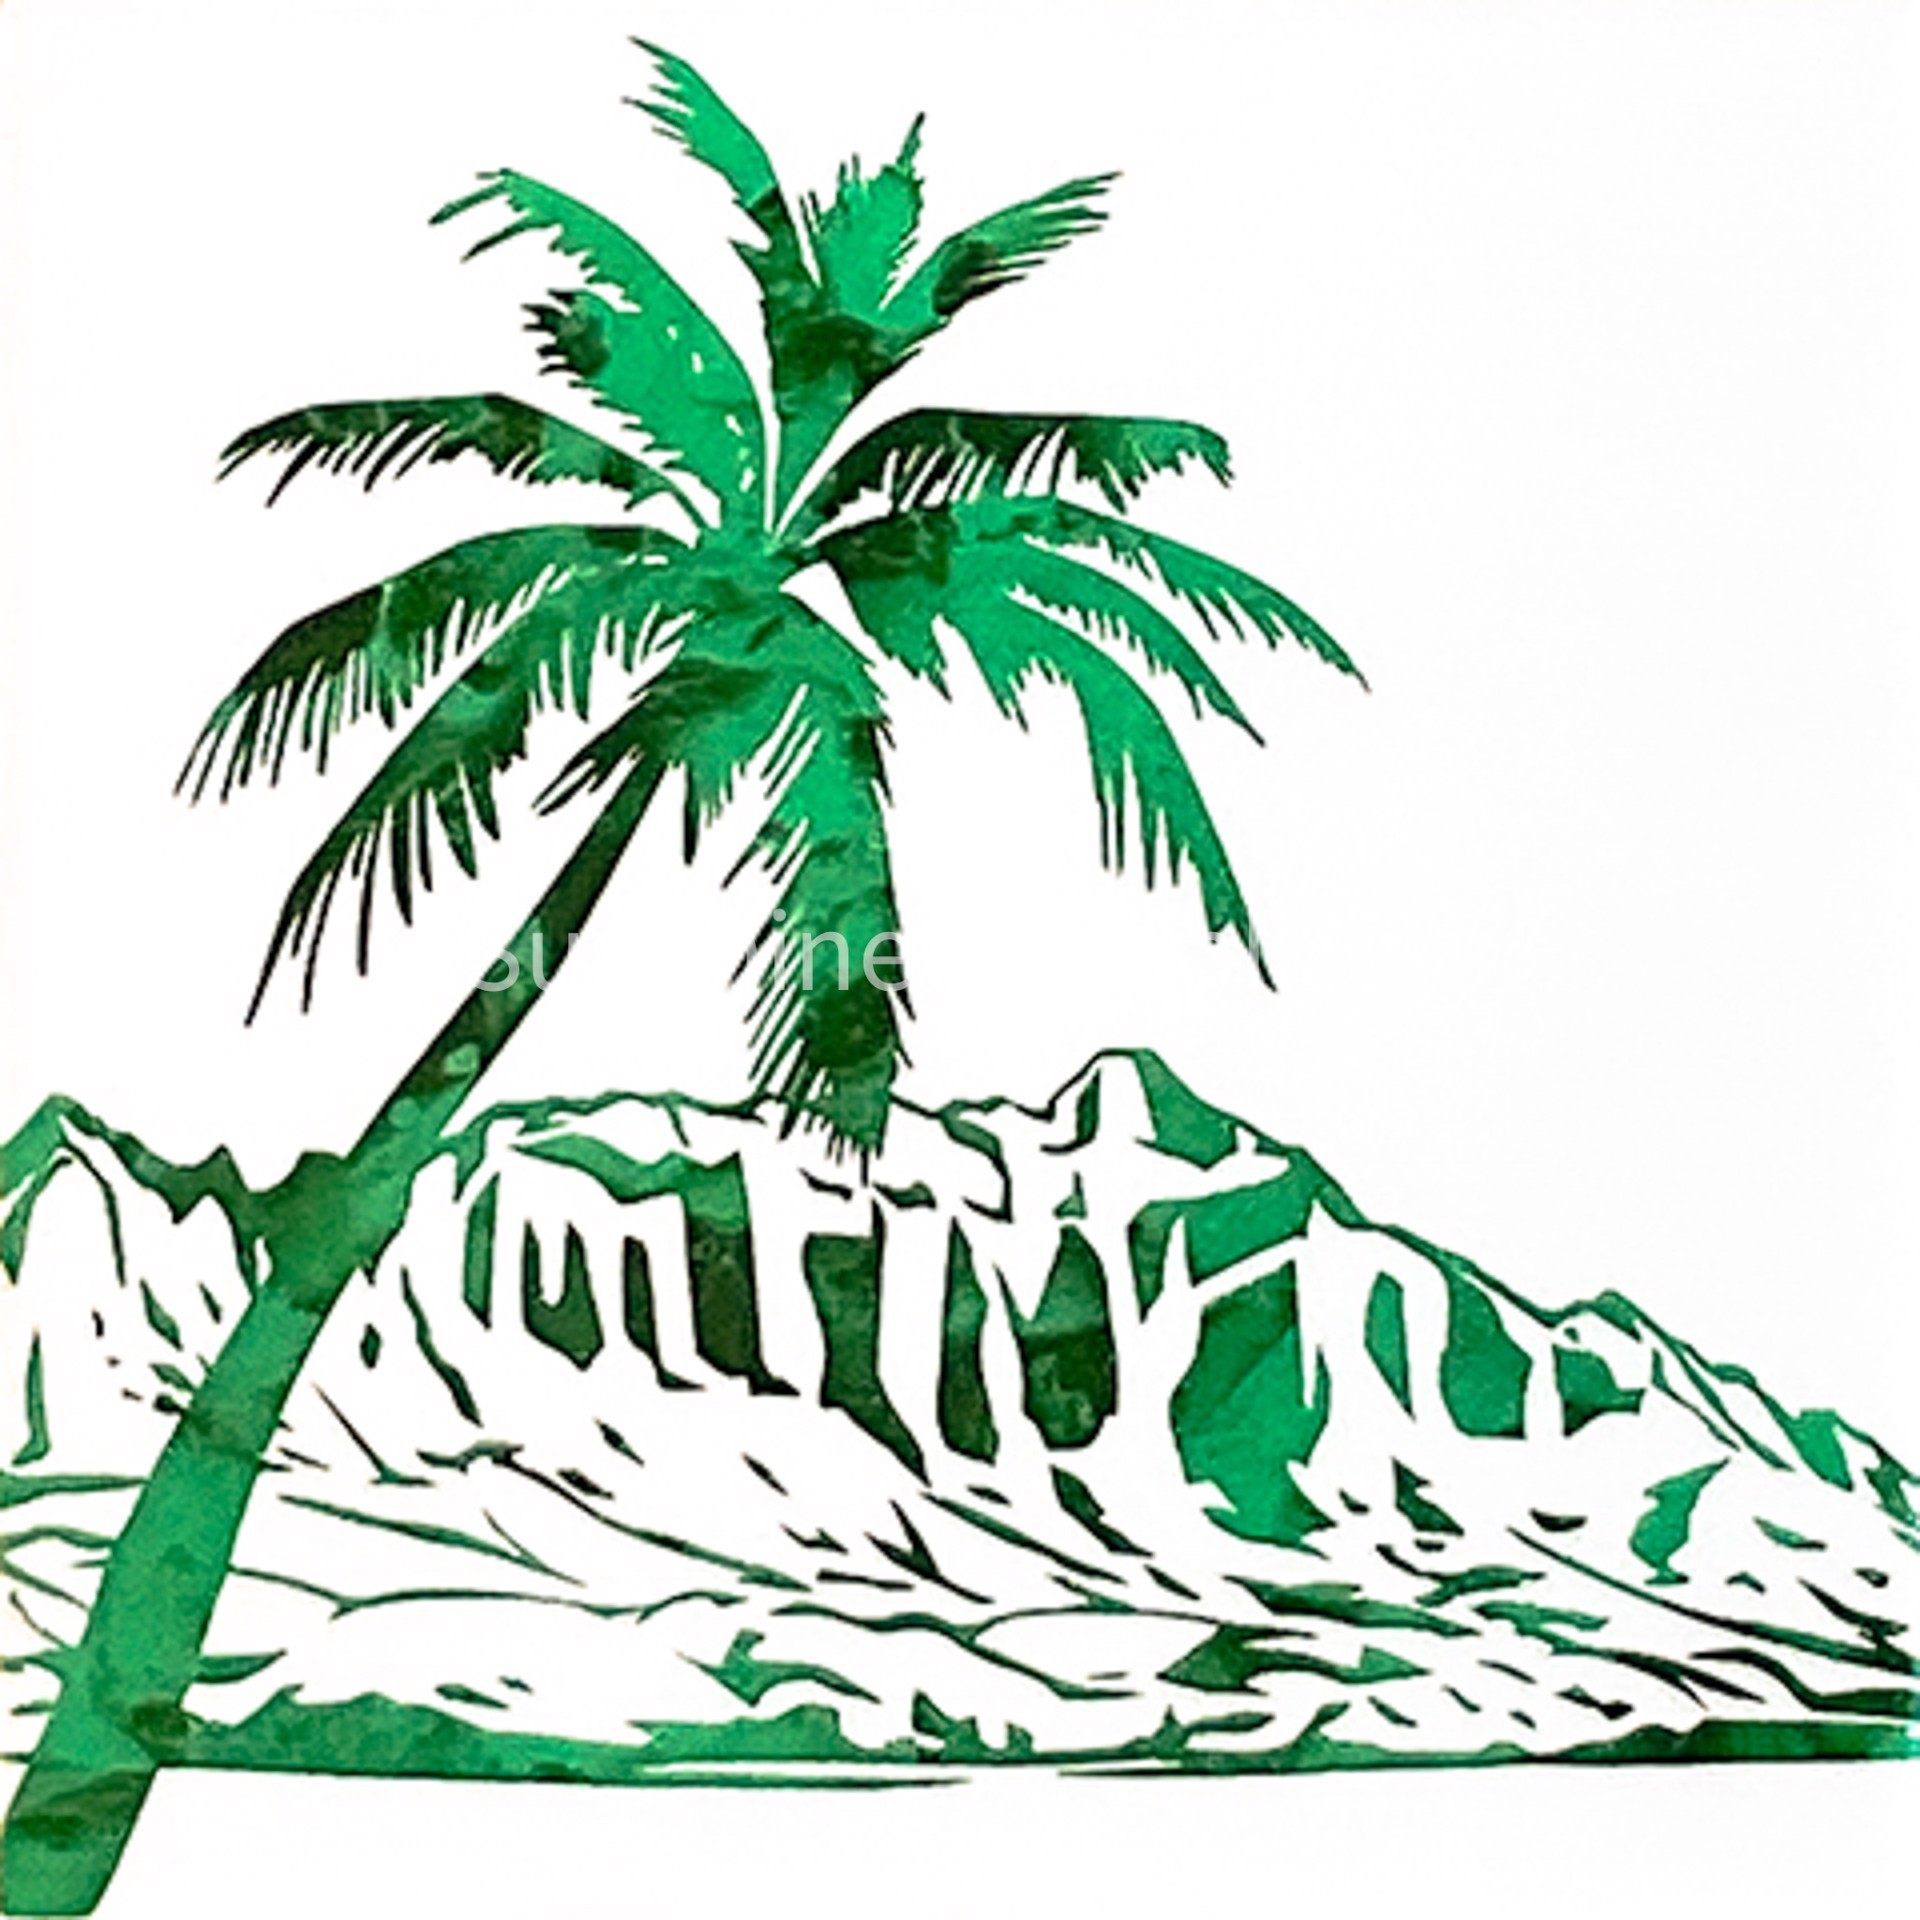 Kāneʻohe Bay by Pati O'Neal